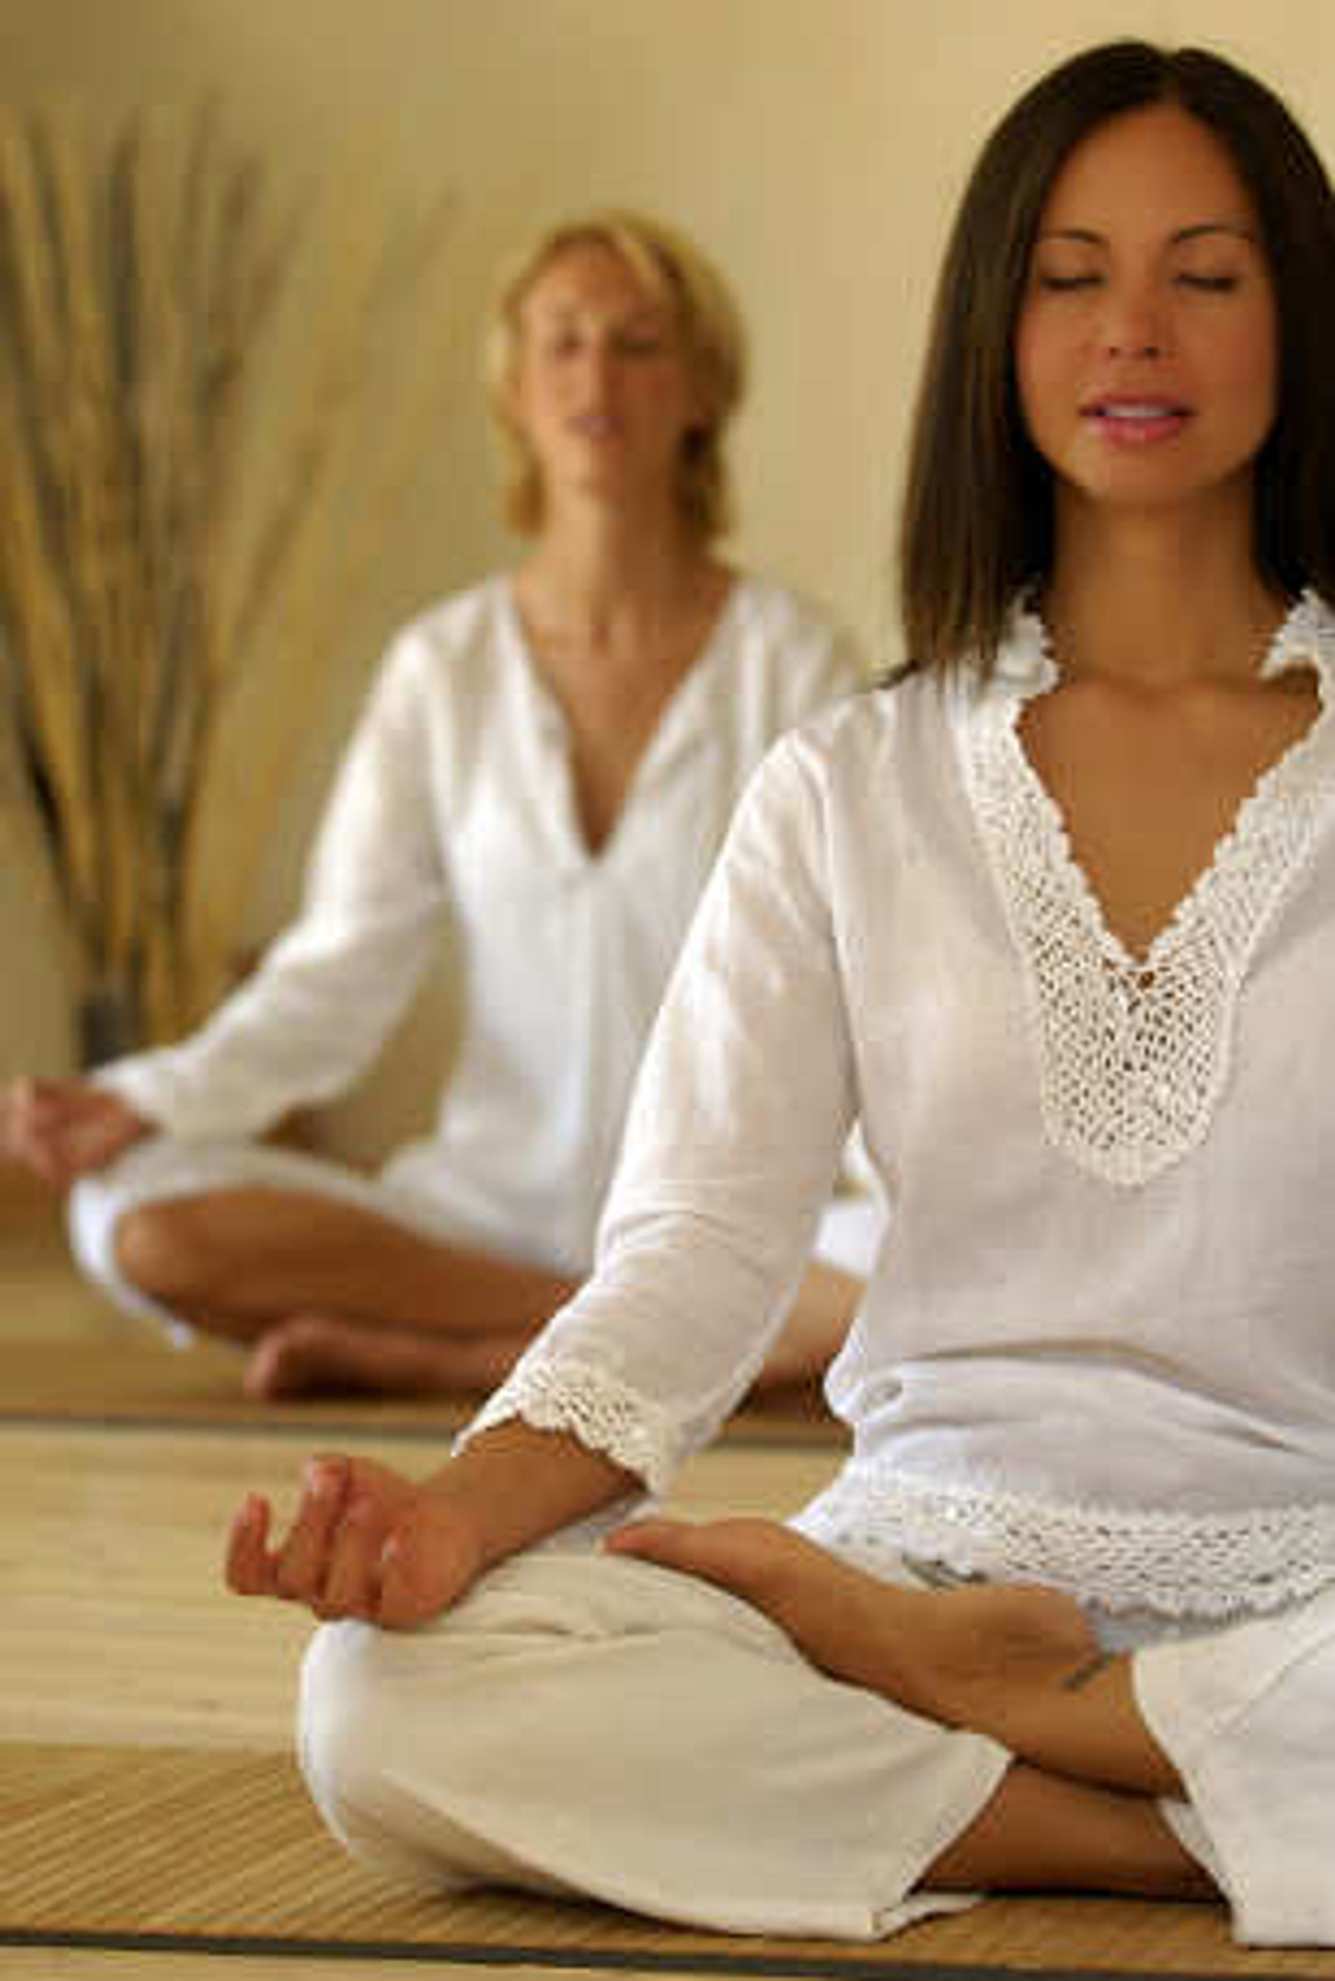 fotolia8924 frauen yoga kurs lotussitz matte entspannt